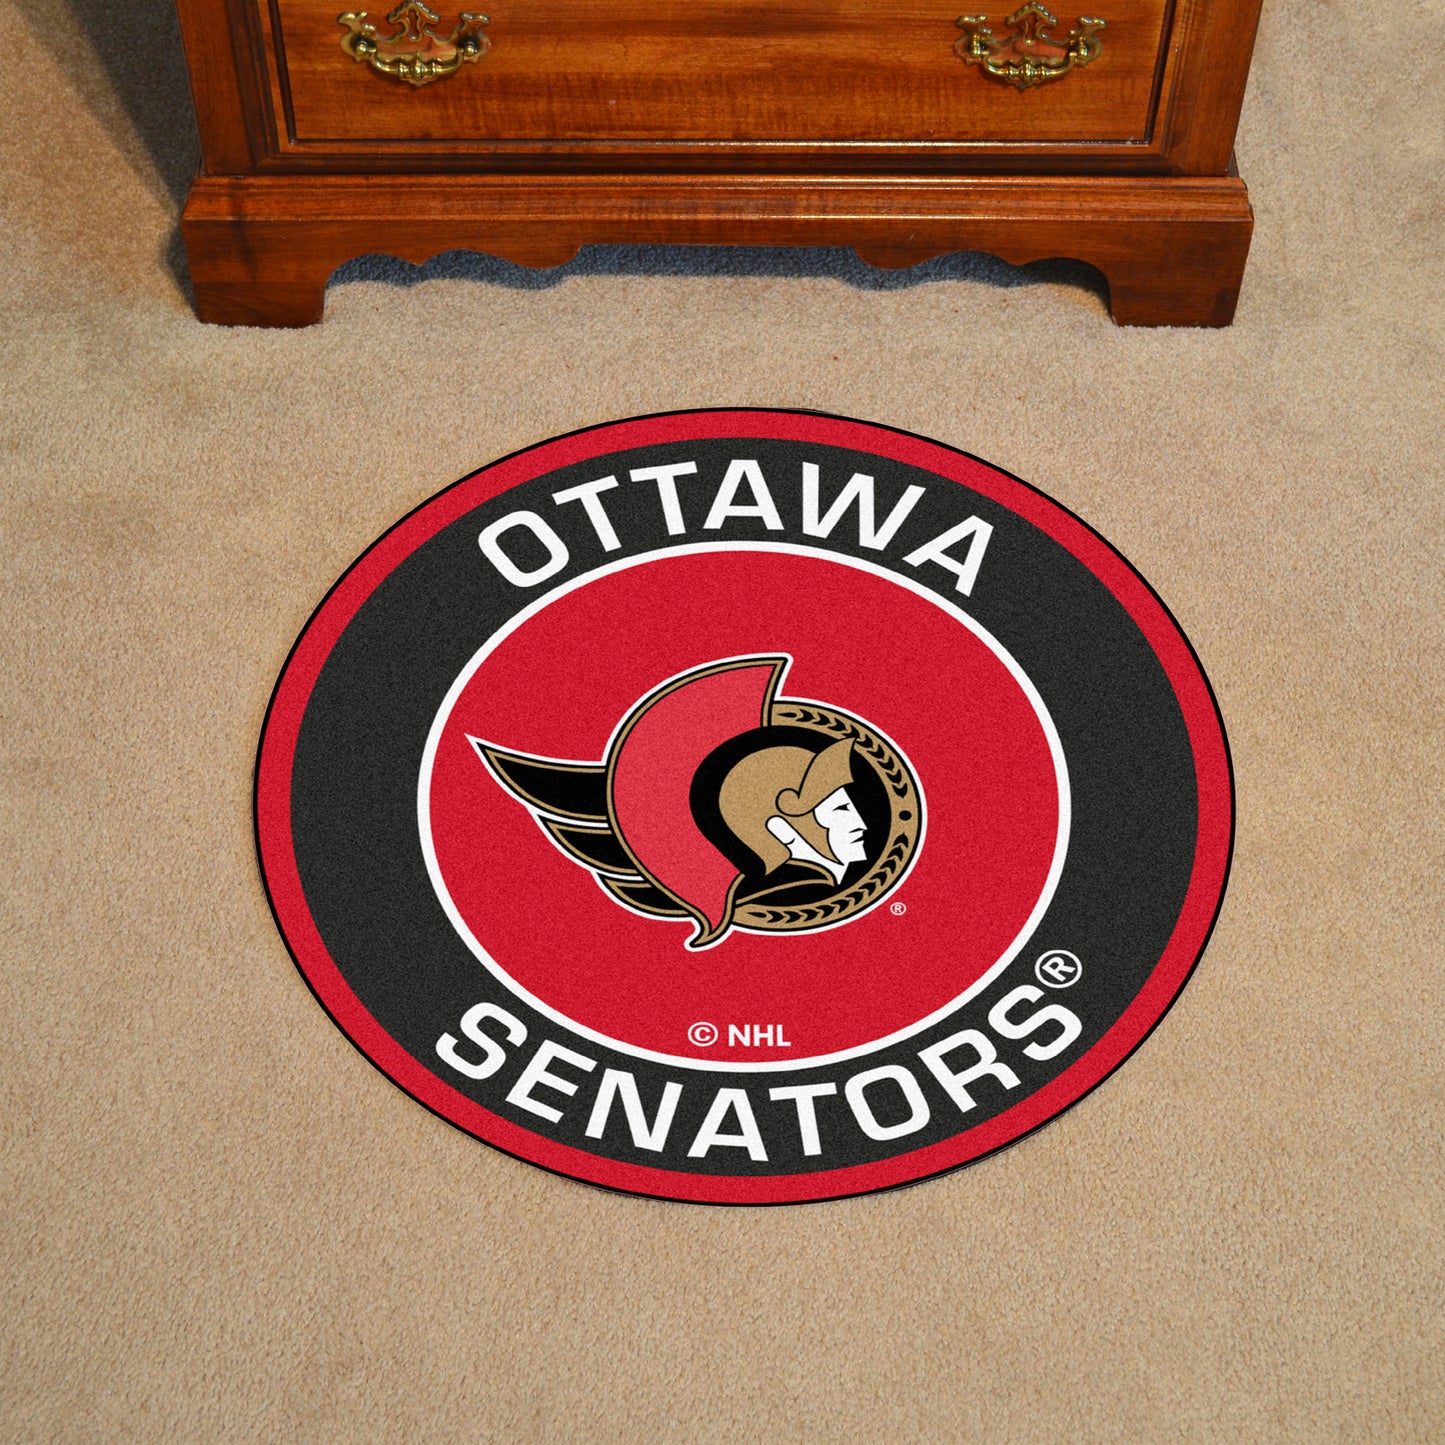 Ottawa Senators Roundel Rug - 27in. Diameter